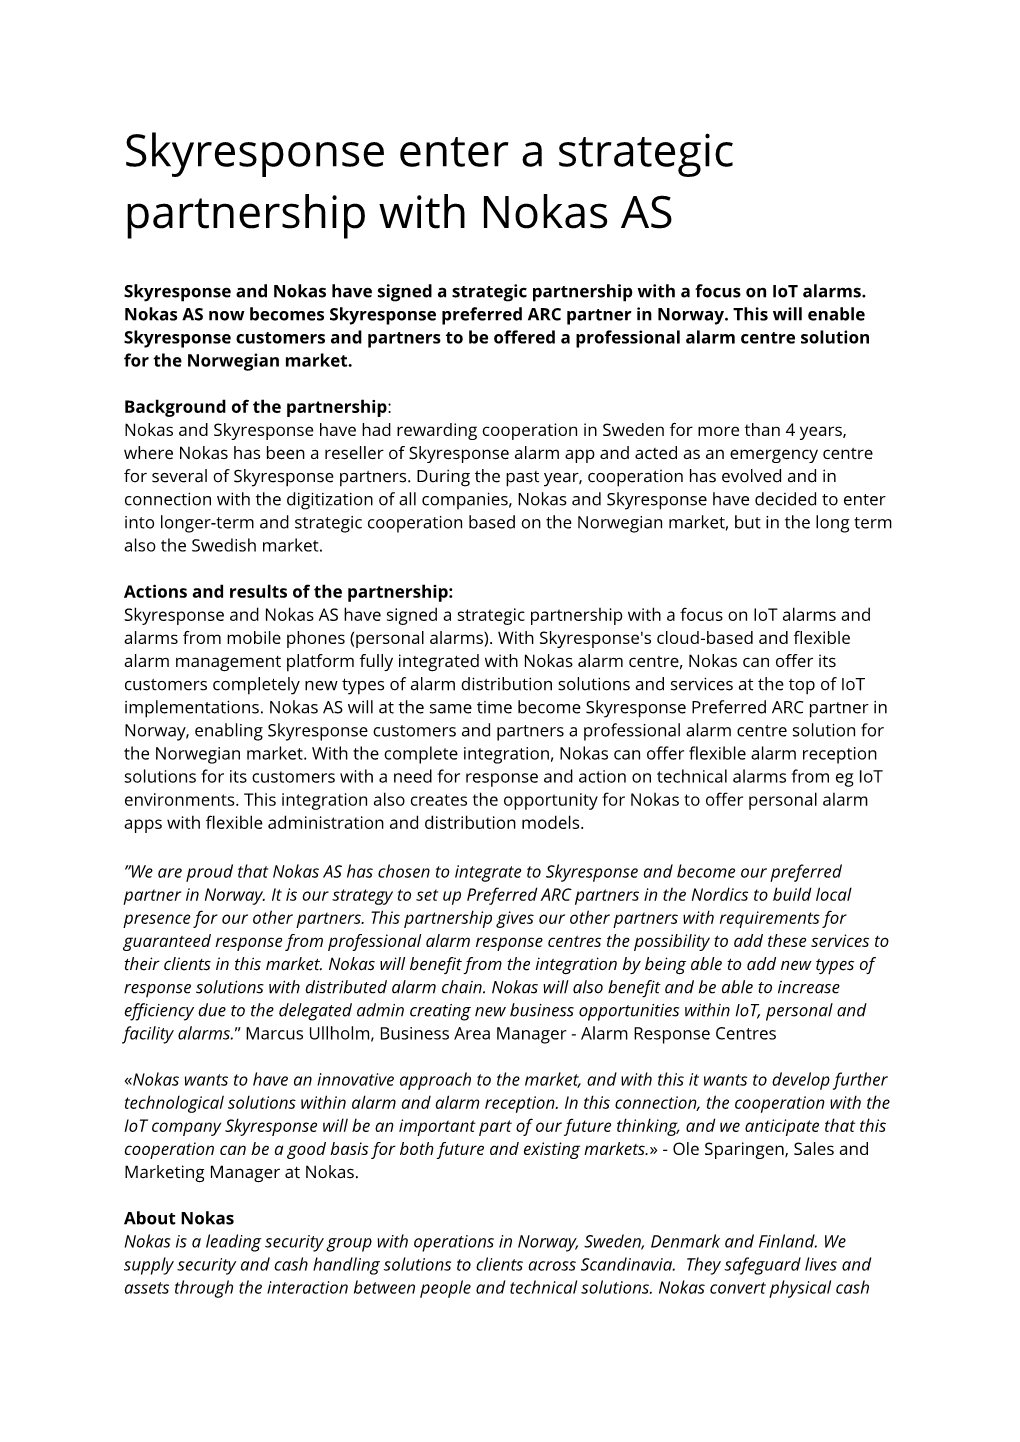 Skyresponse Enter a Strategic Partnership with Nokas AS